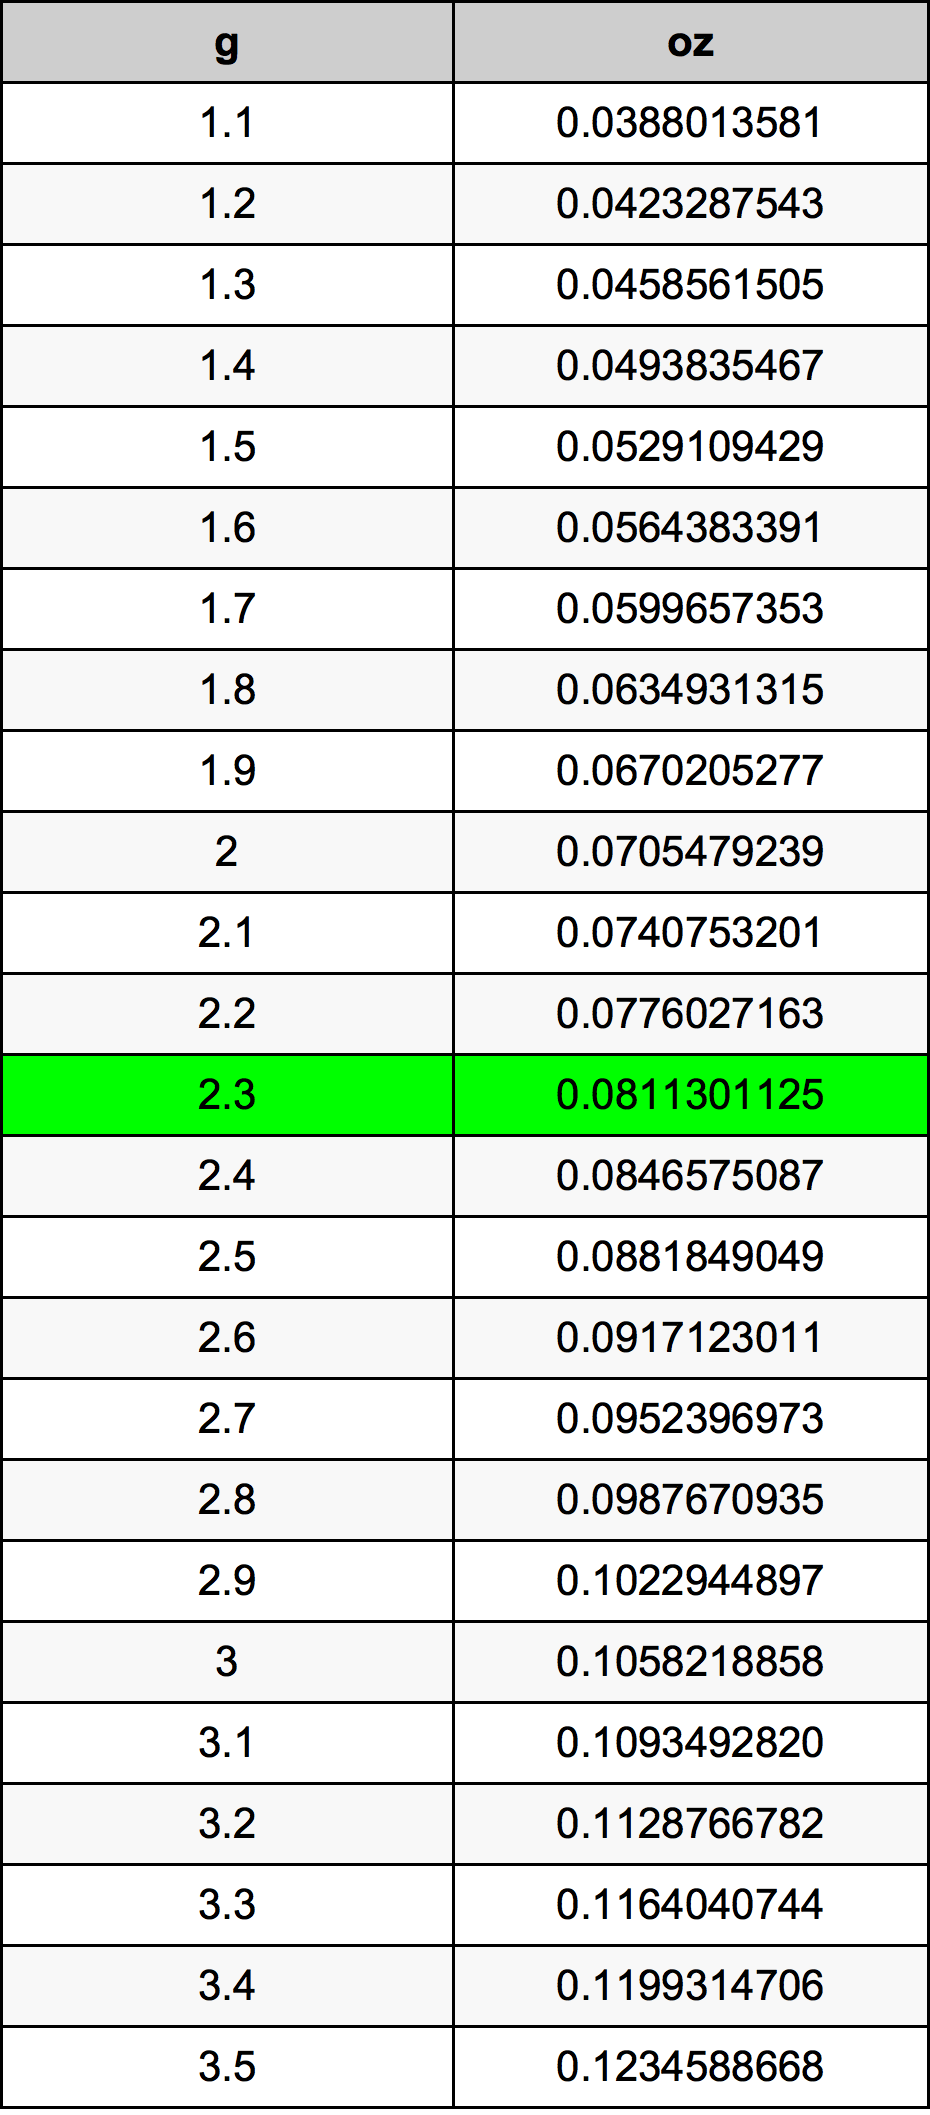 2.3 غرام جدول تحويل